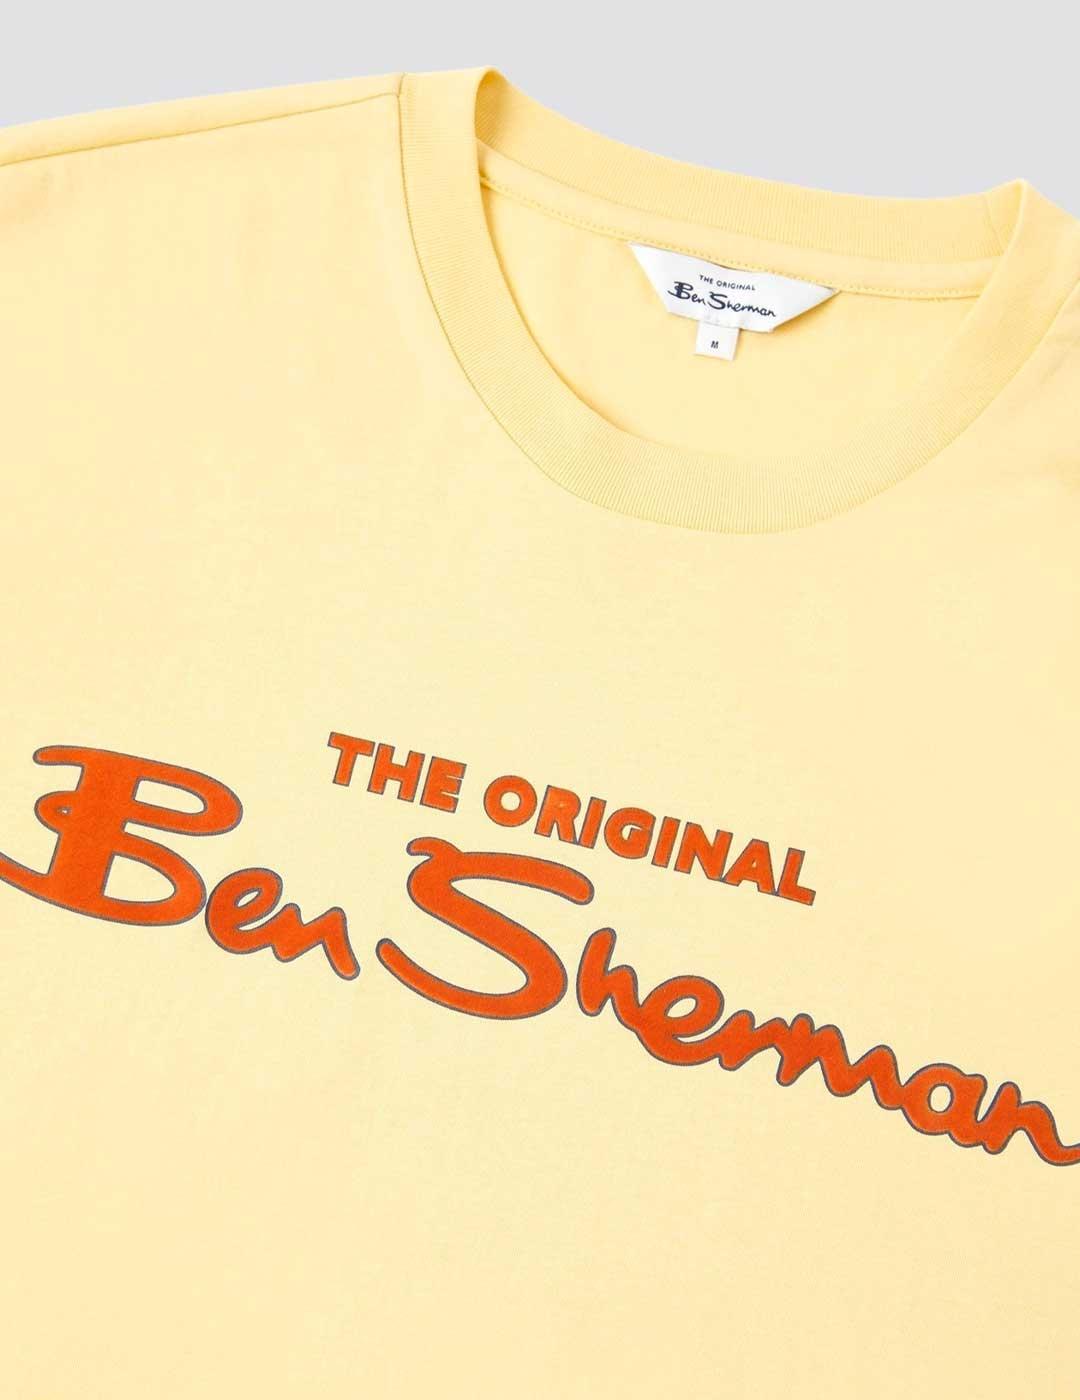 Camiseta Ben Sherman Signature Flock amarilla para hombre